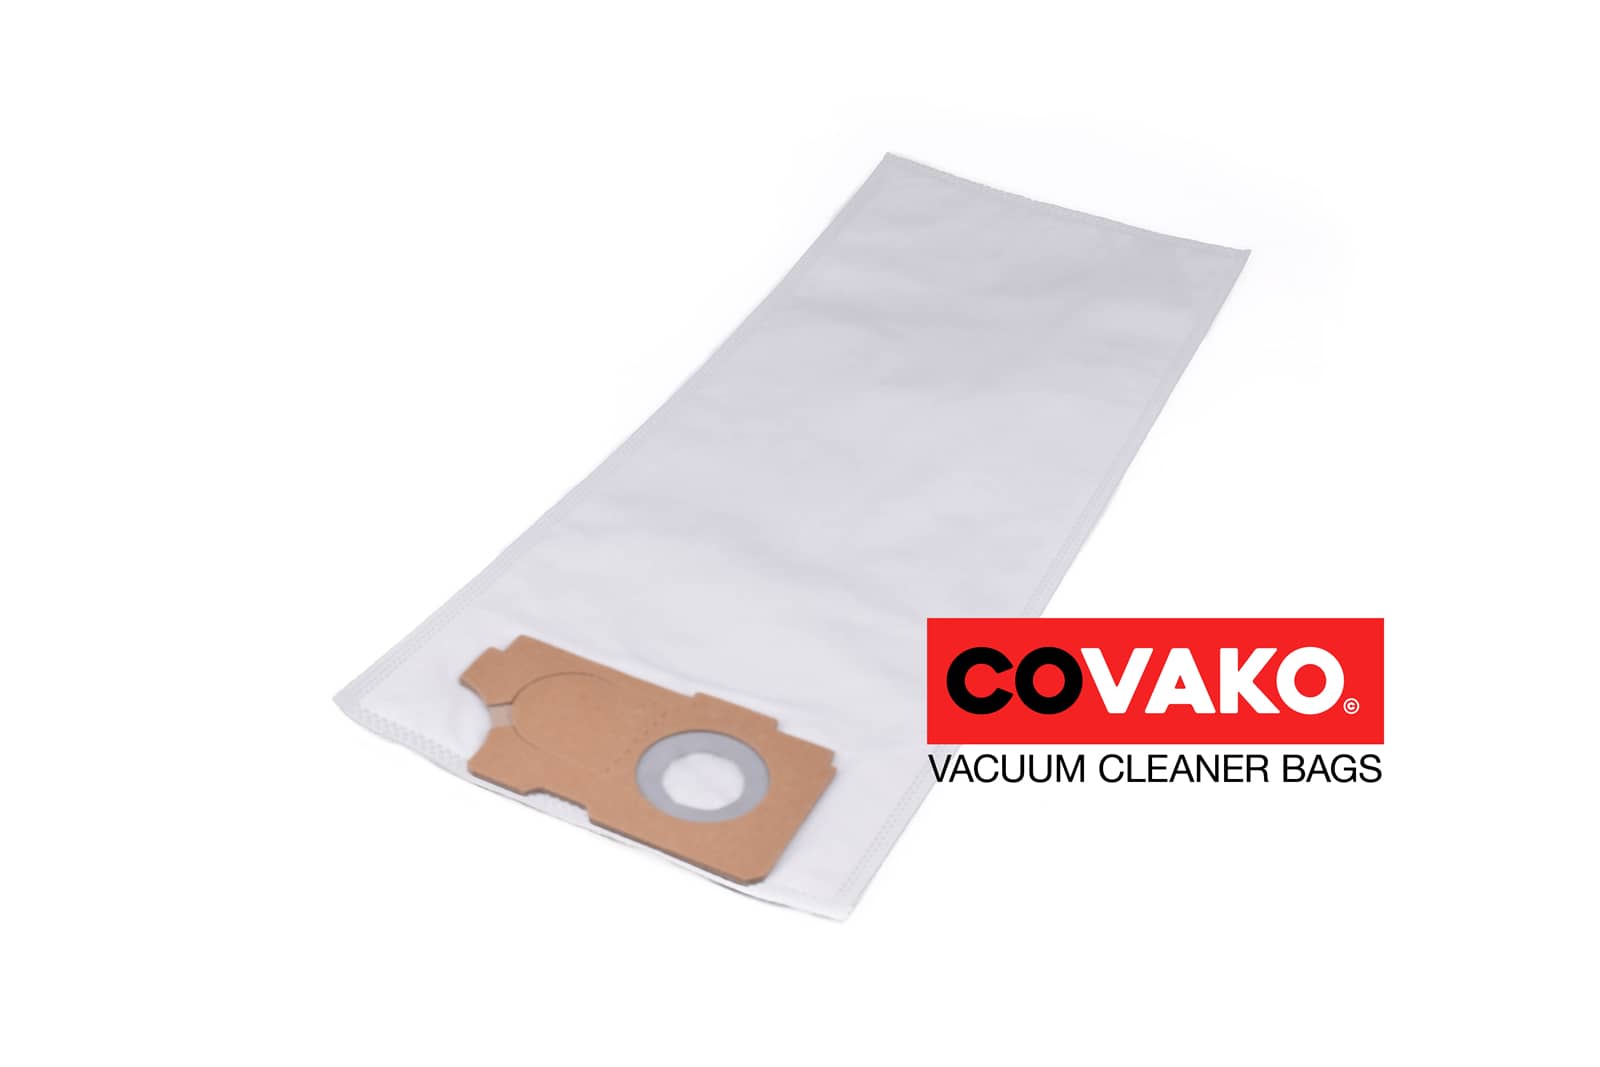 Clean a la Card Comfort 46 / Synthesis - Clean a la Card vacuum cleaner bags